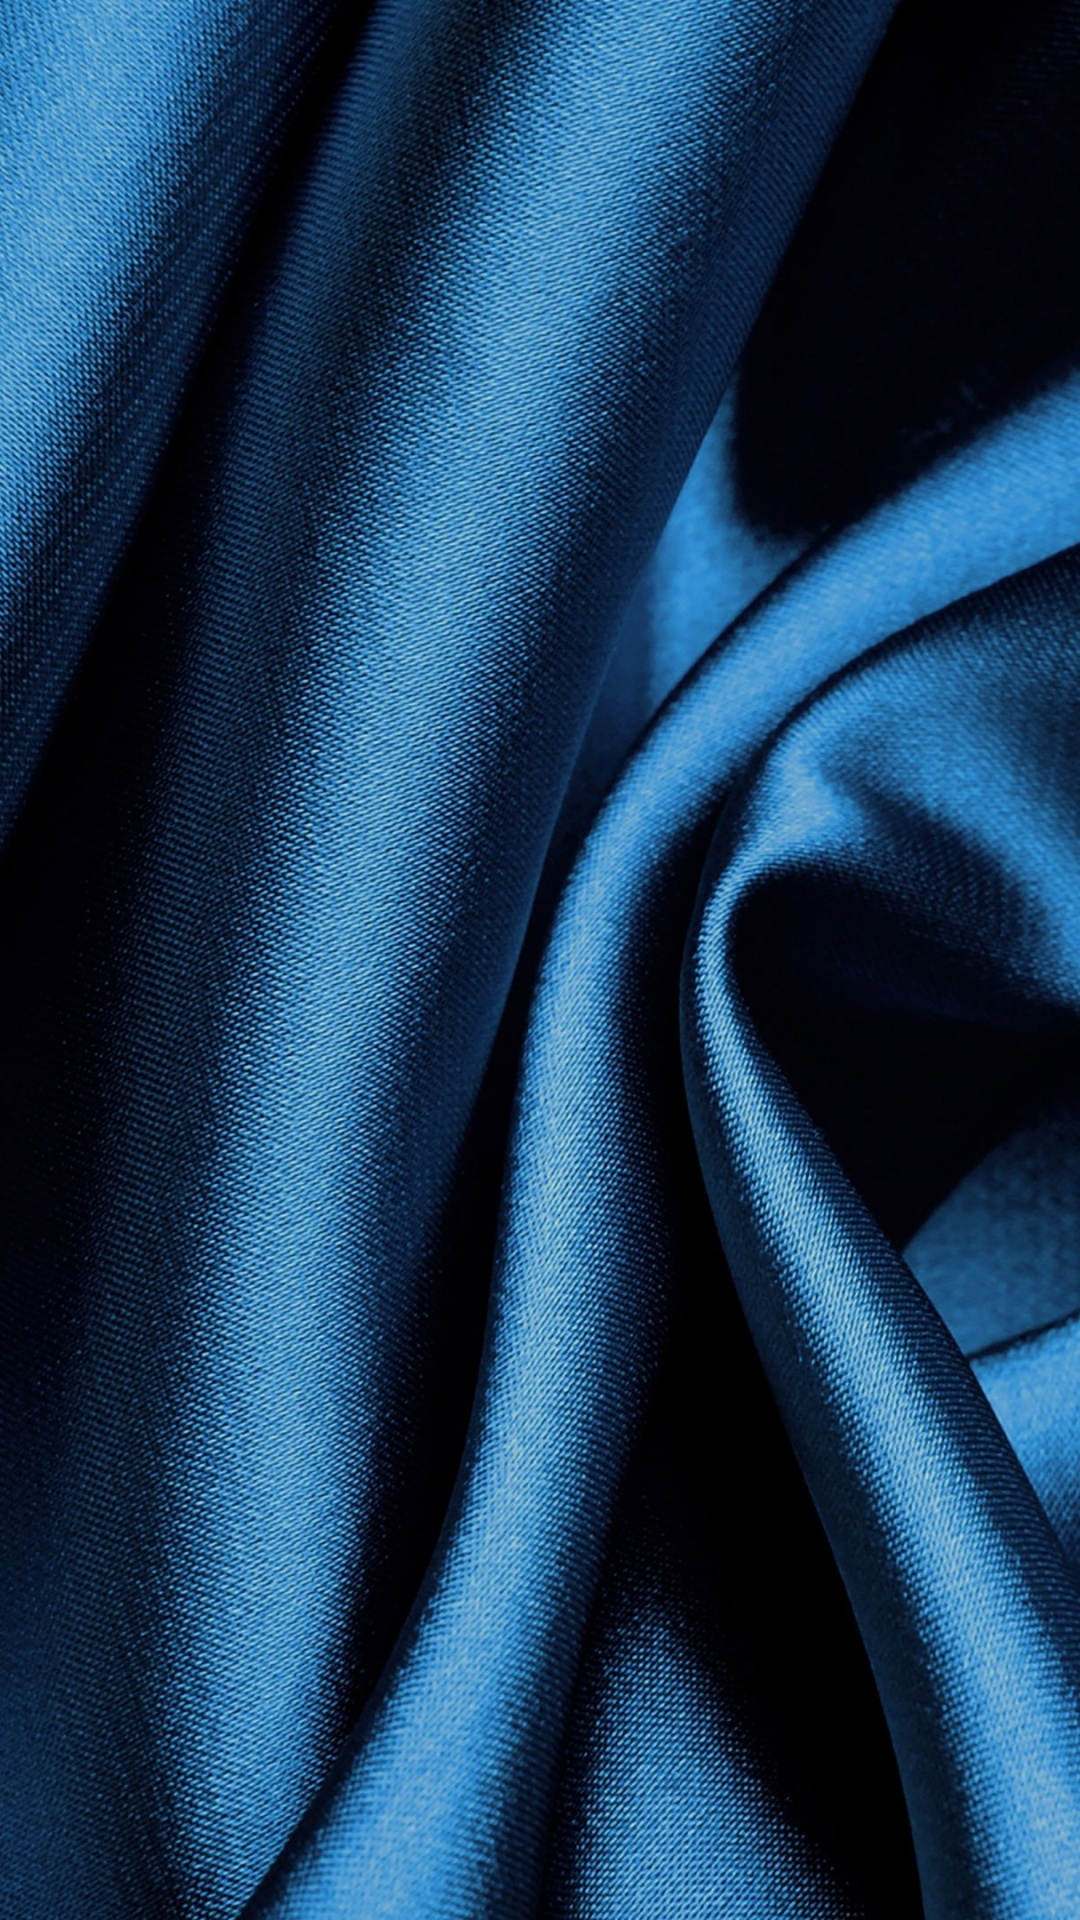 Textil Azul en Fotografía de Cerca. Wallpaper in 1080x1920 Resolution